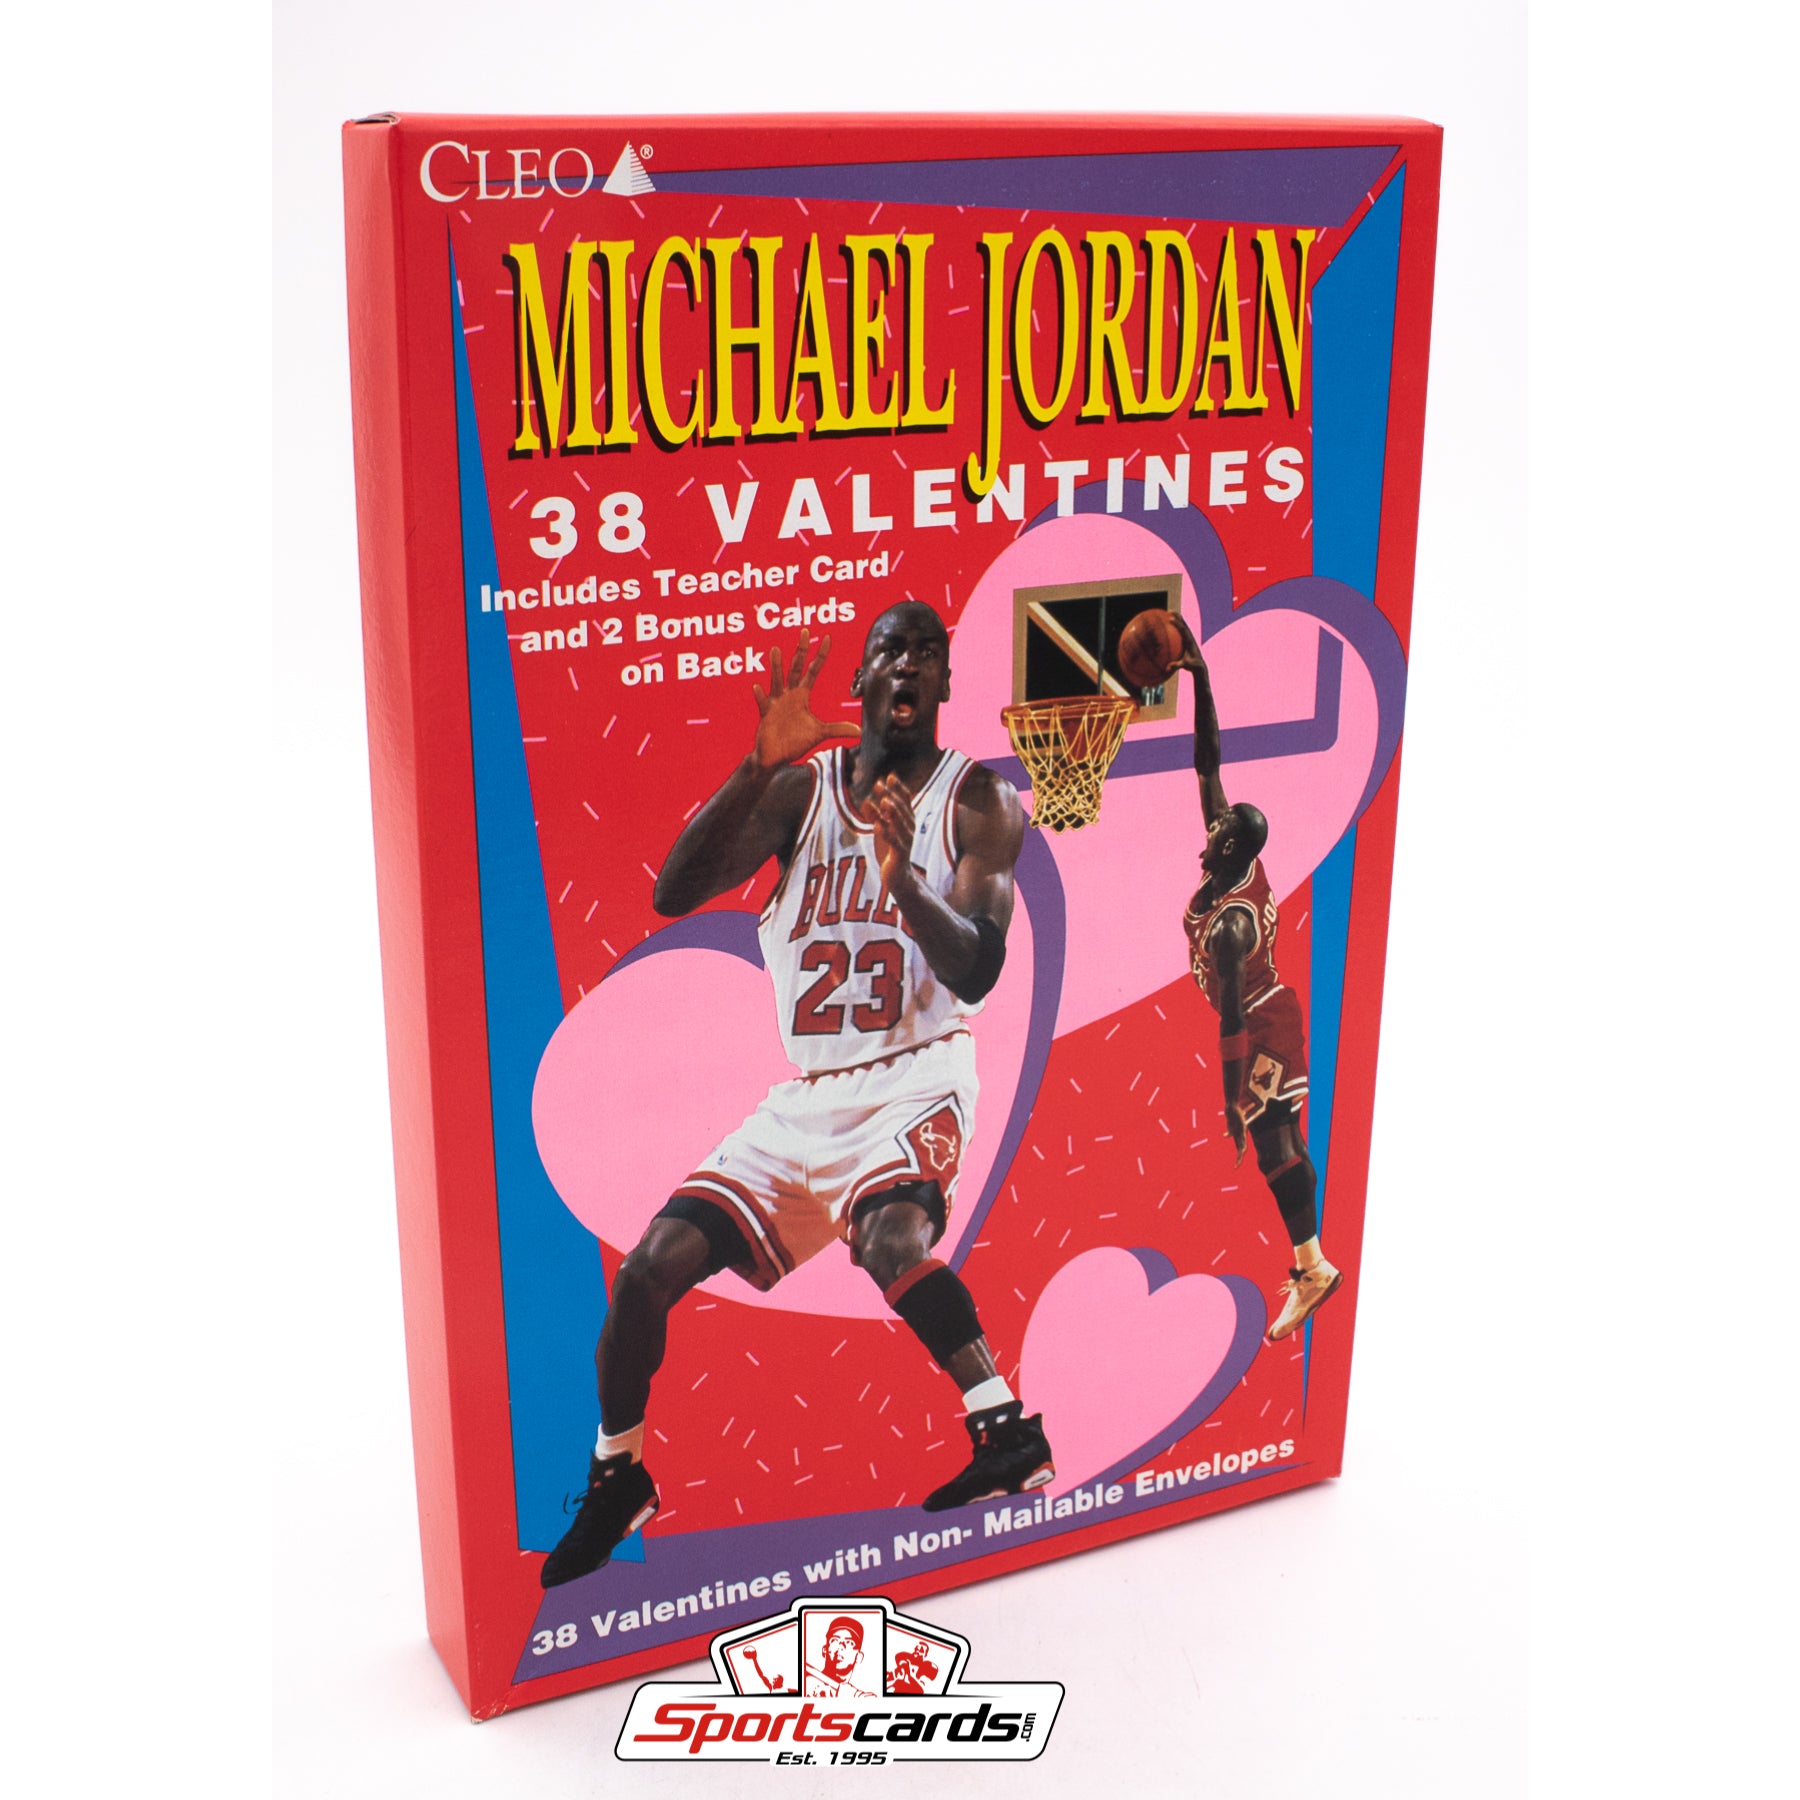 1991 Cleo Michael Jordan Valentines Cards Box w/ (38) Valentine Cards